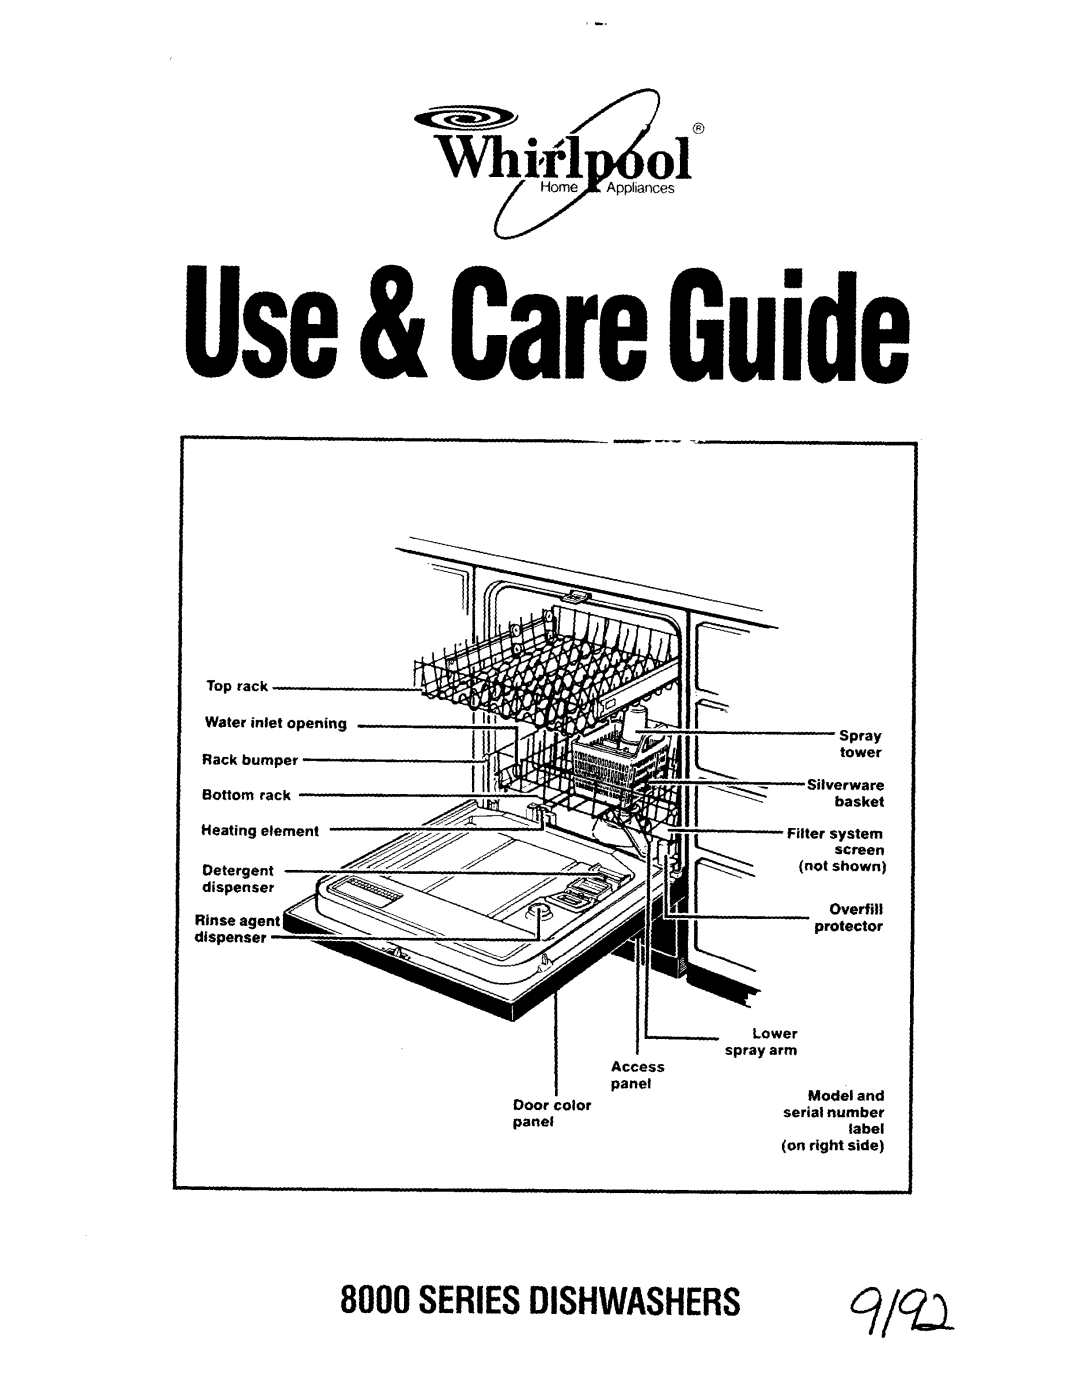 Whirlpool 8000 Series manual 